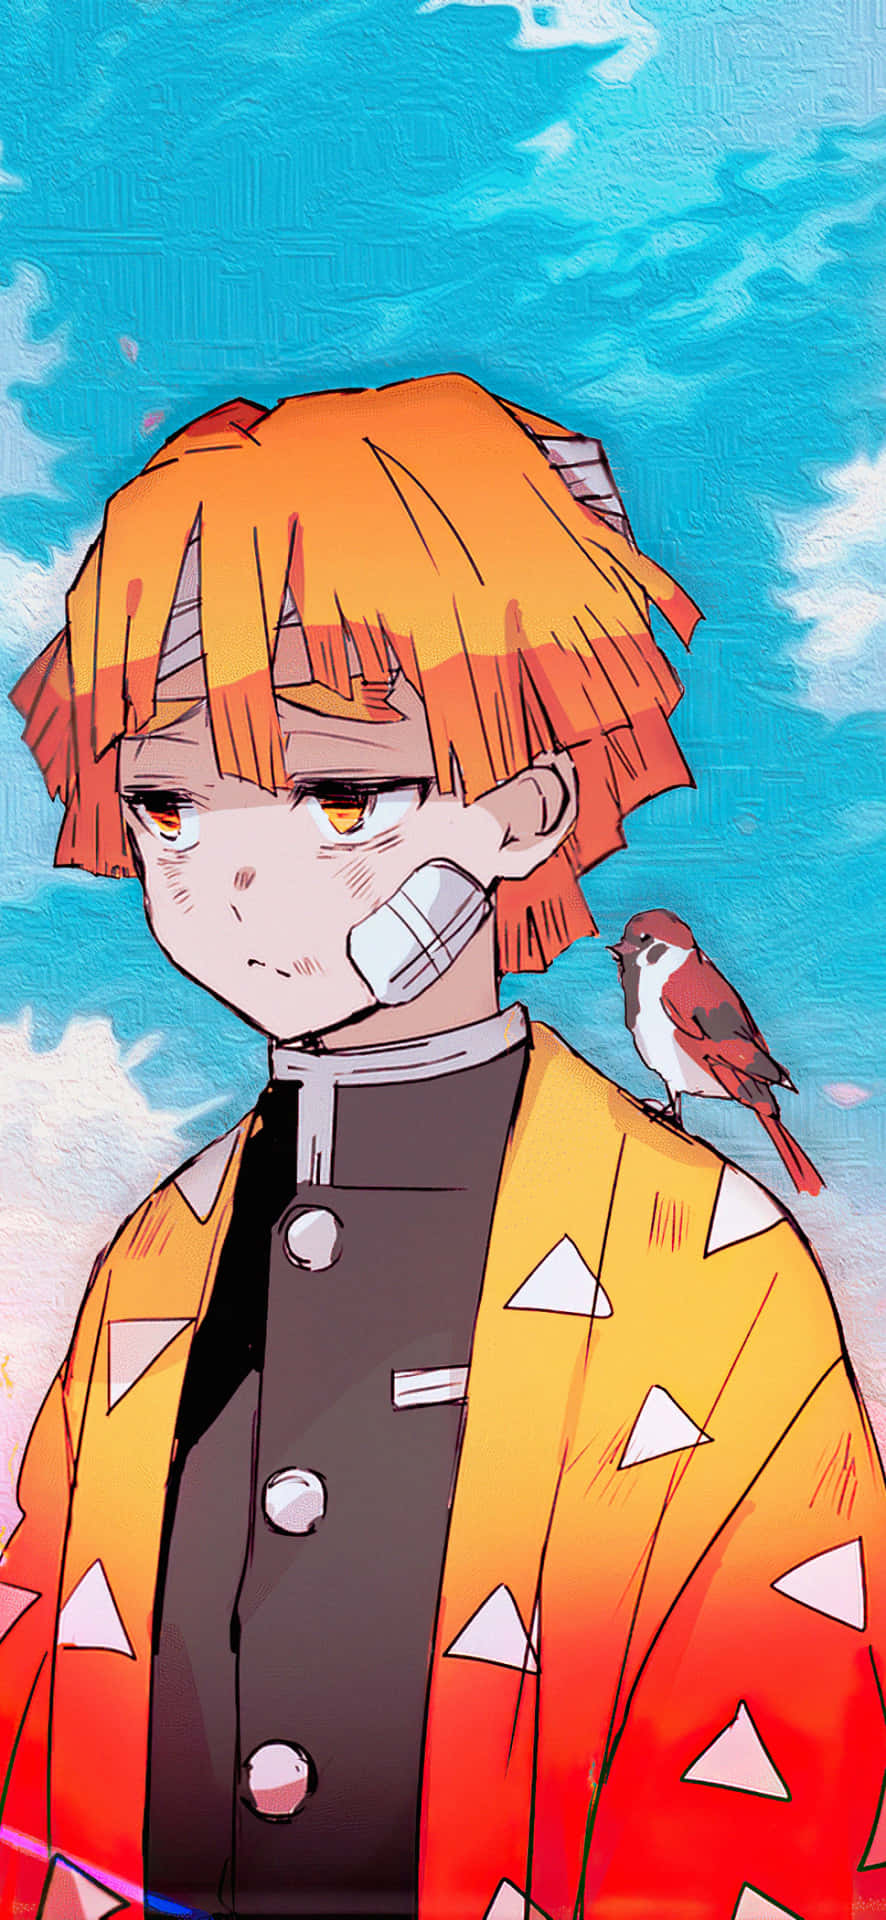 En mand med orange hår og en fugl på hans skulder. Wallpaper